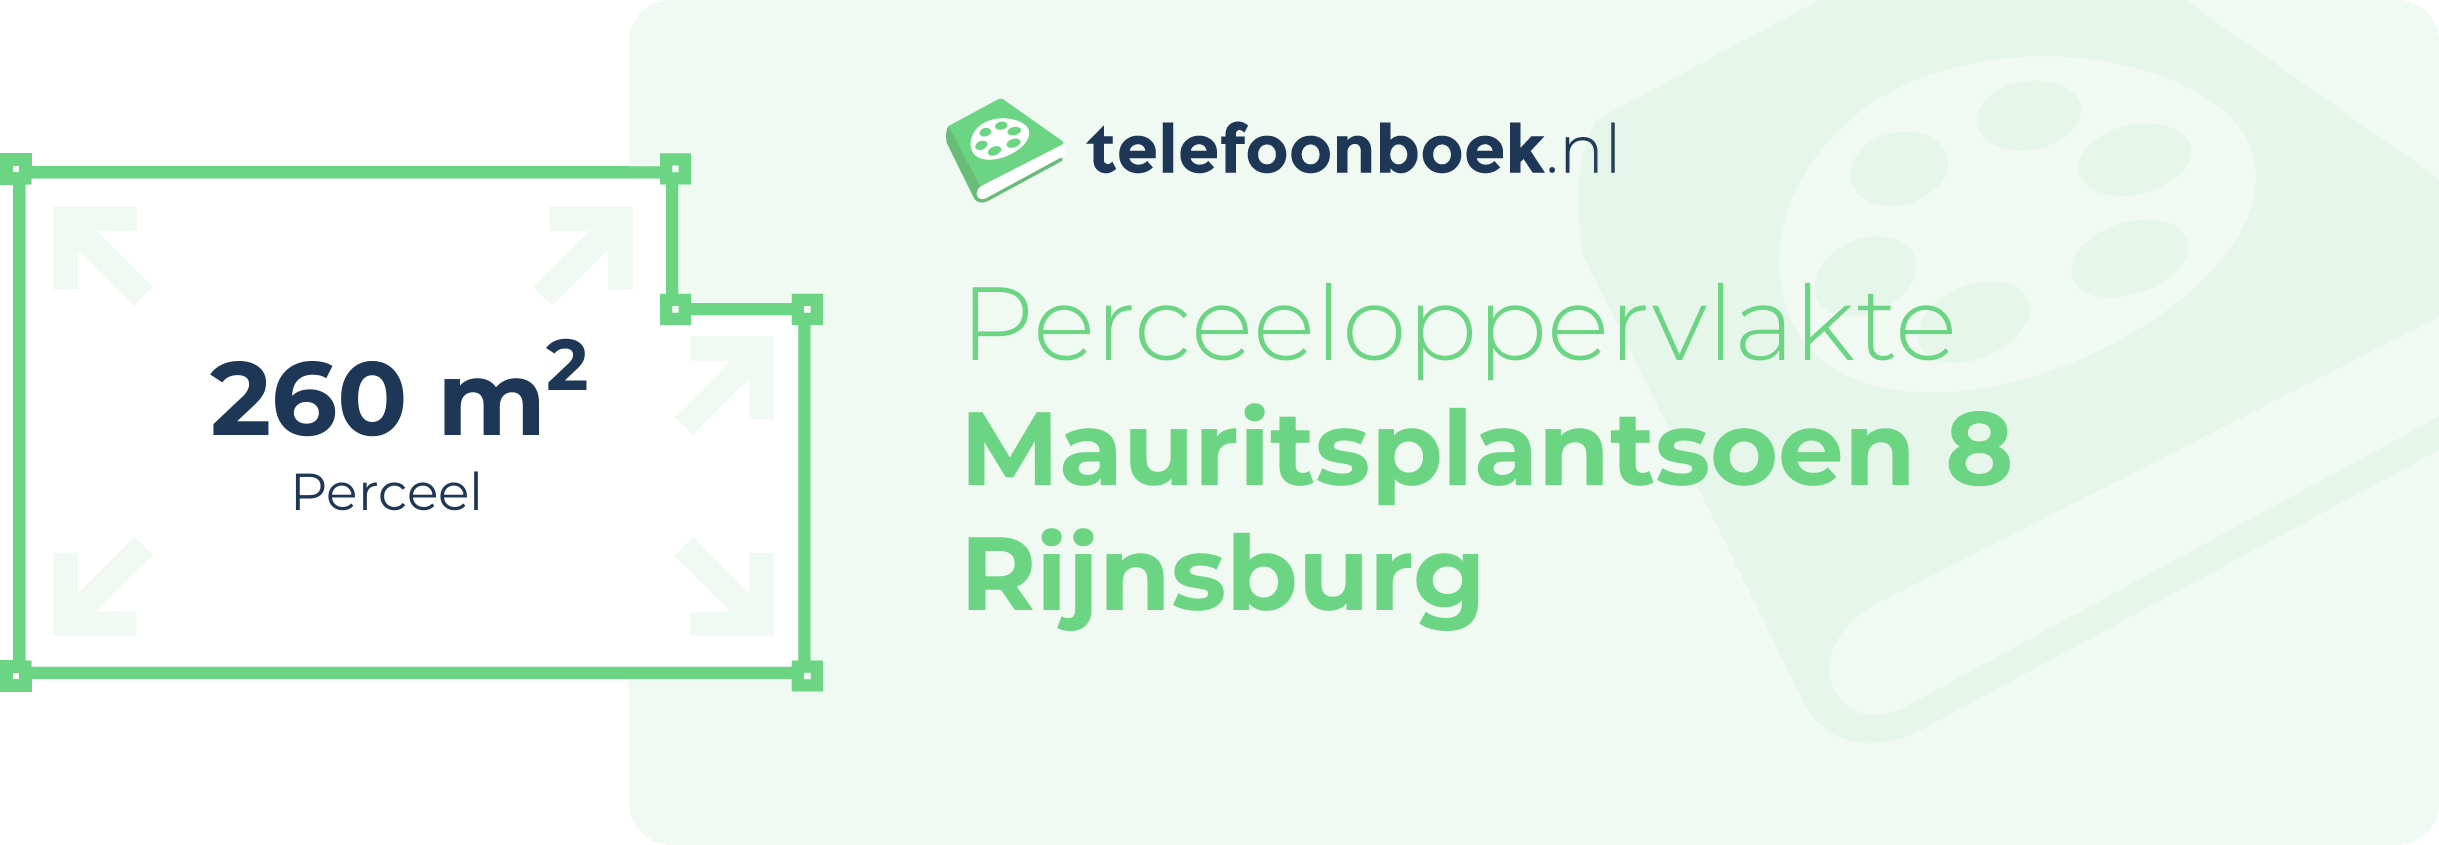 Perceeloppervlakte Mauritsplantsoen 8 Rijnsburg